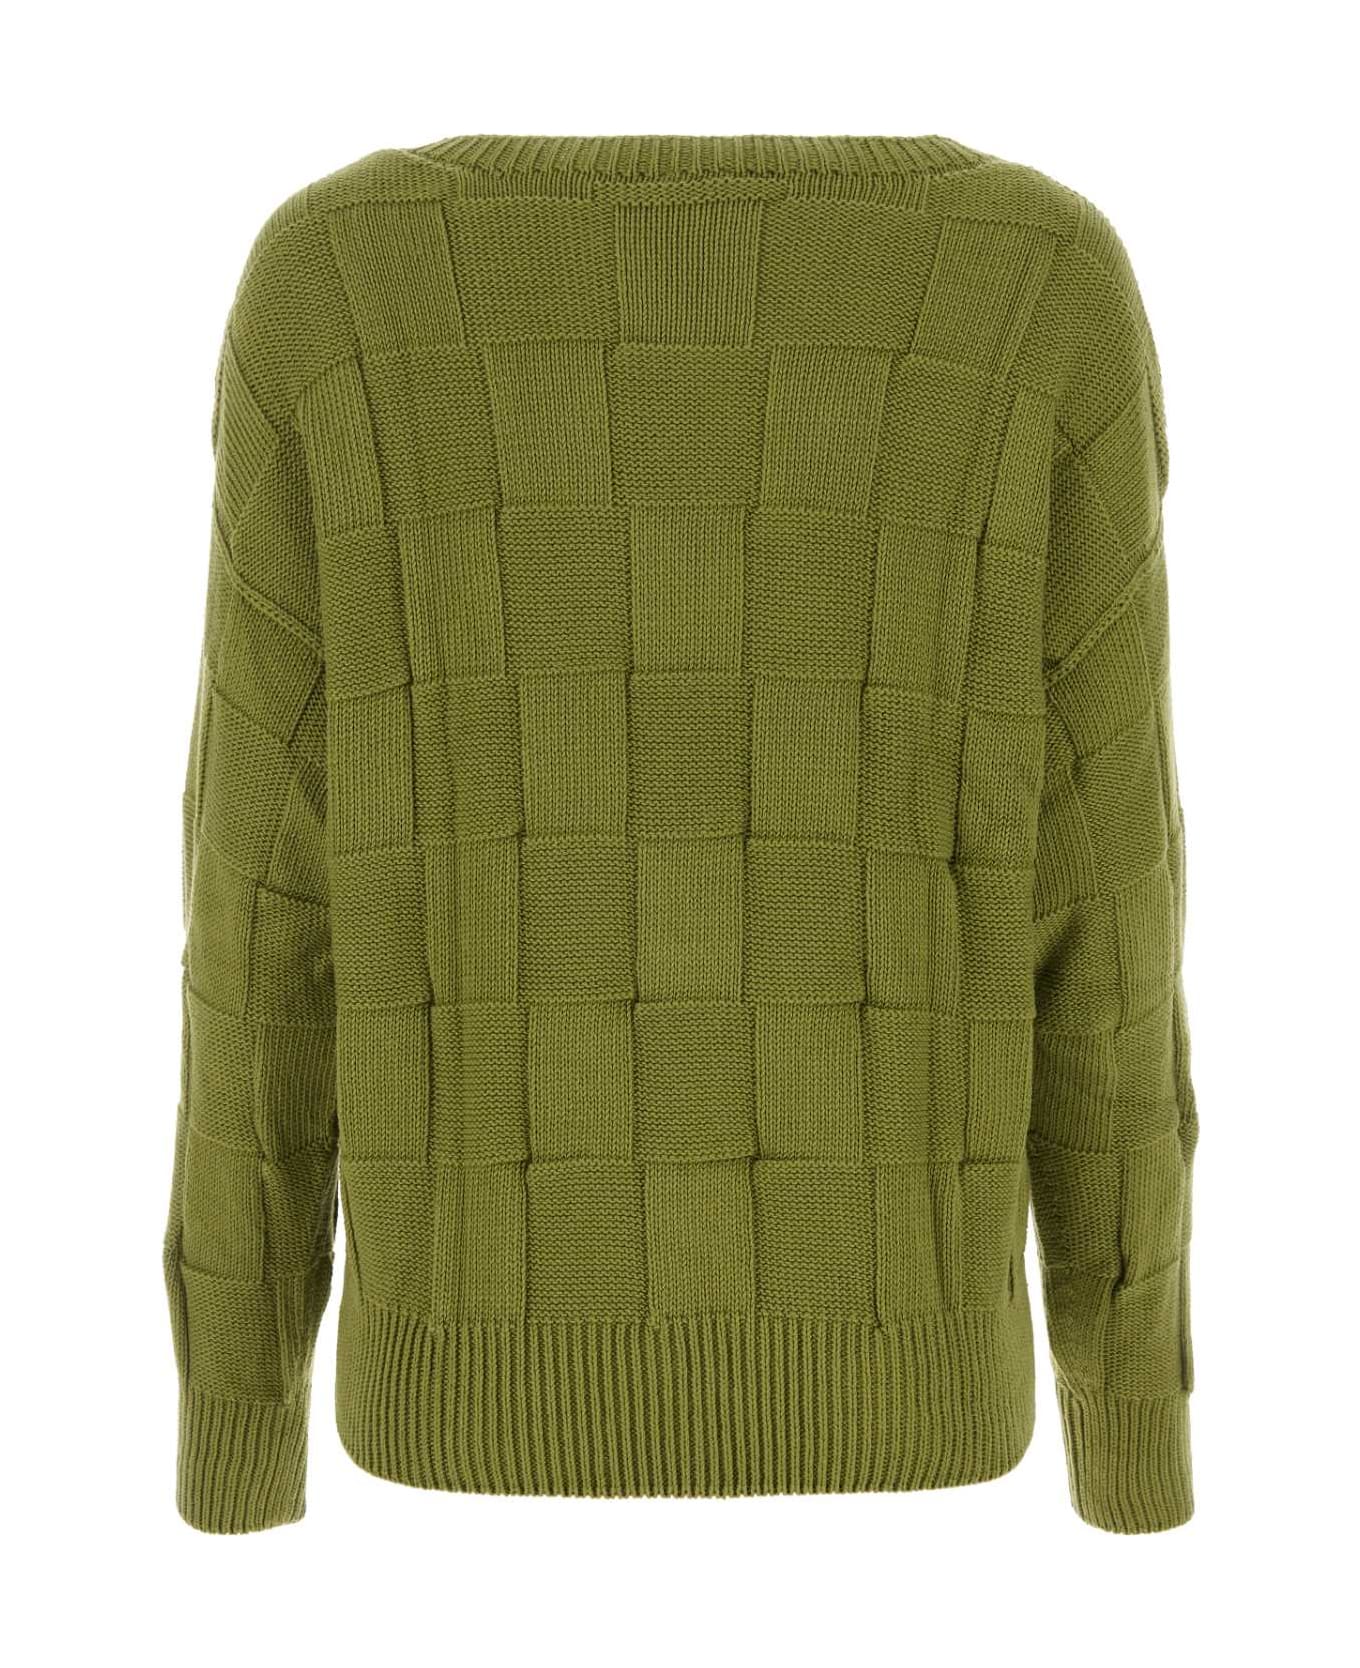 Baserange Olive Green Cotton Sweater - ZEKGREEN